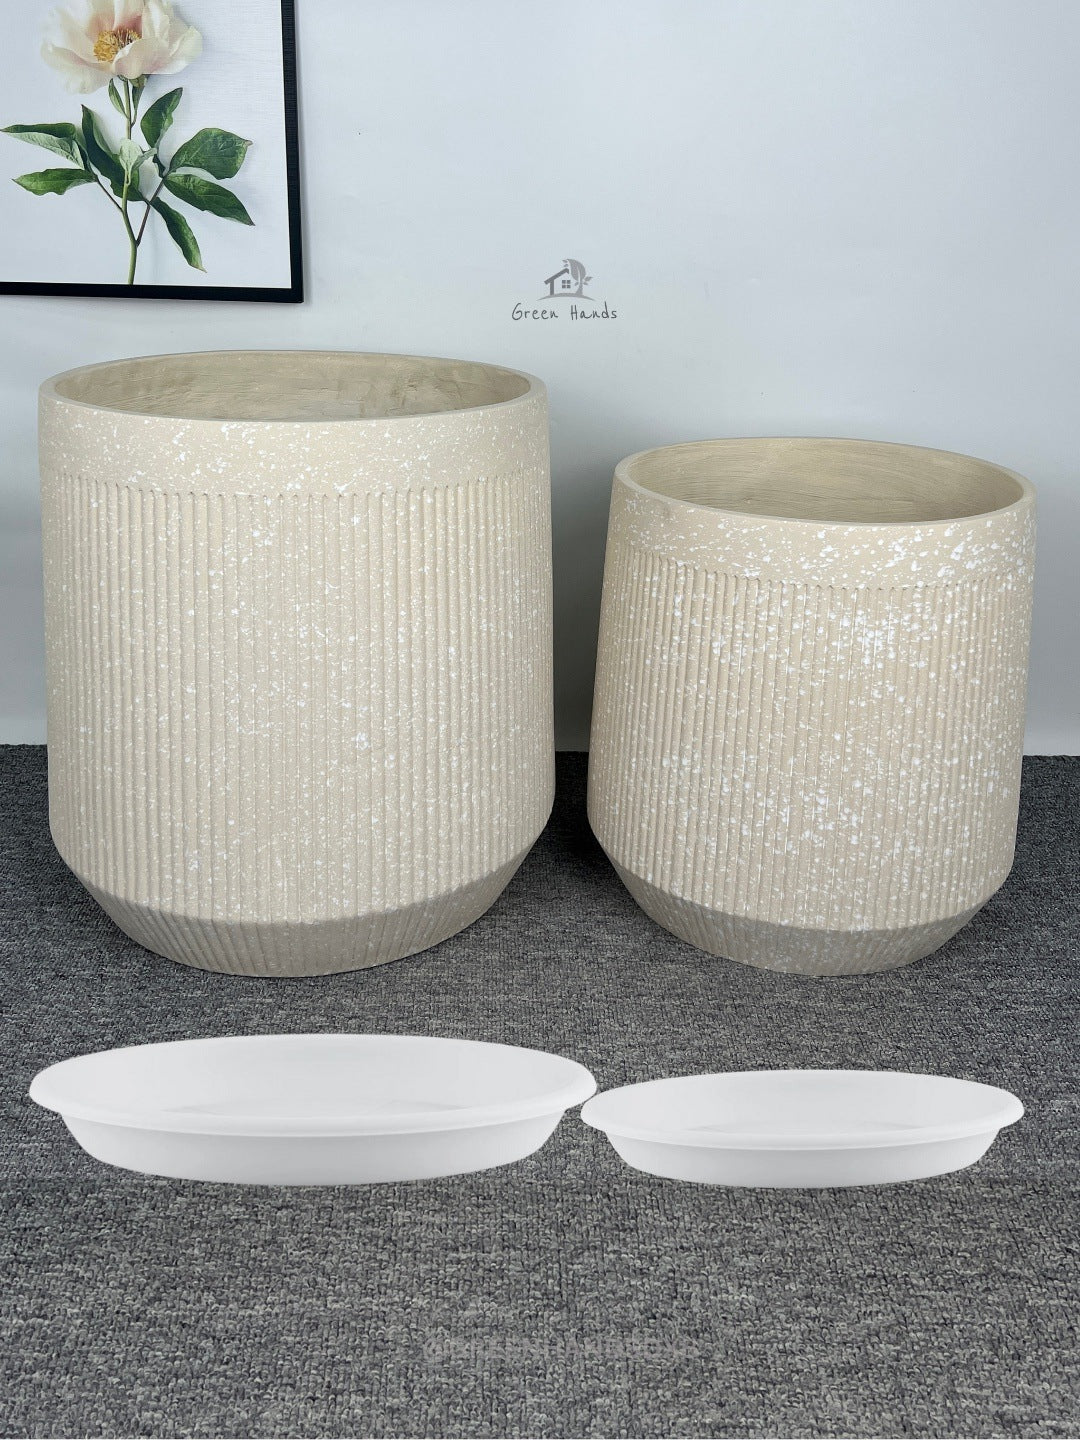 Arabian Sand Fiber Pots | Lightweight & Elegant | Perfect for Home Decor